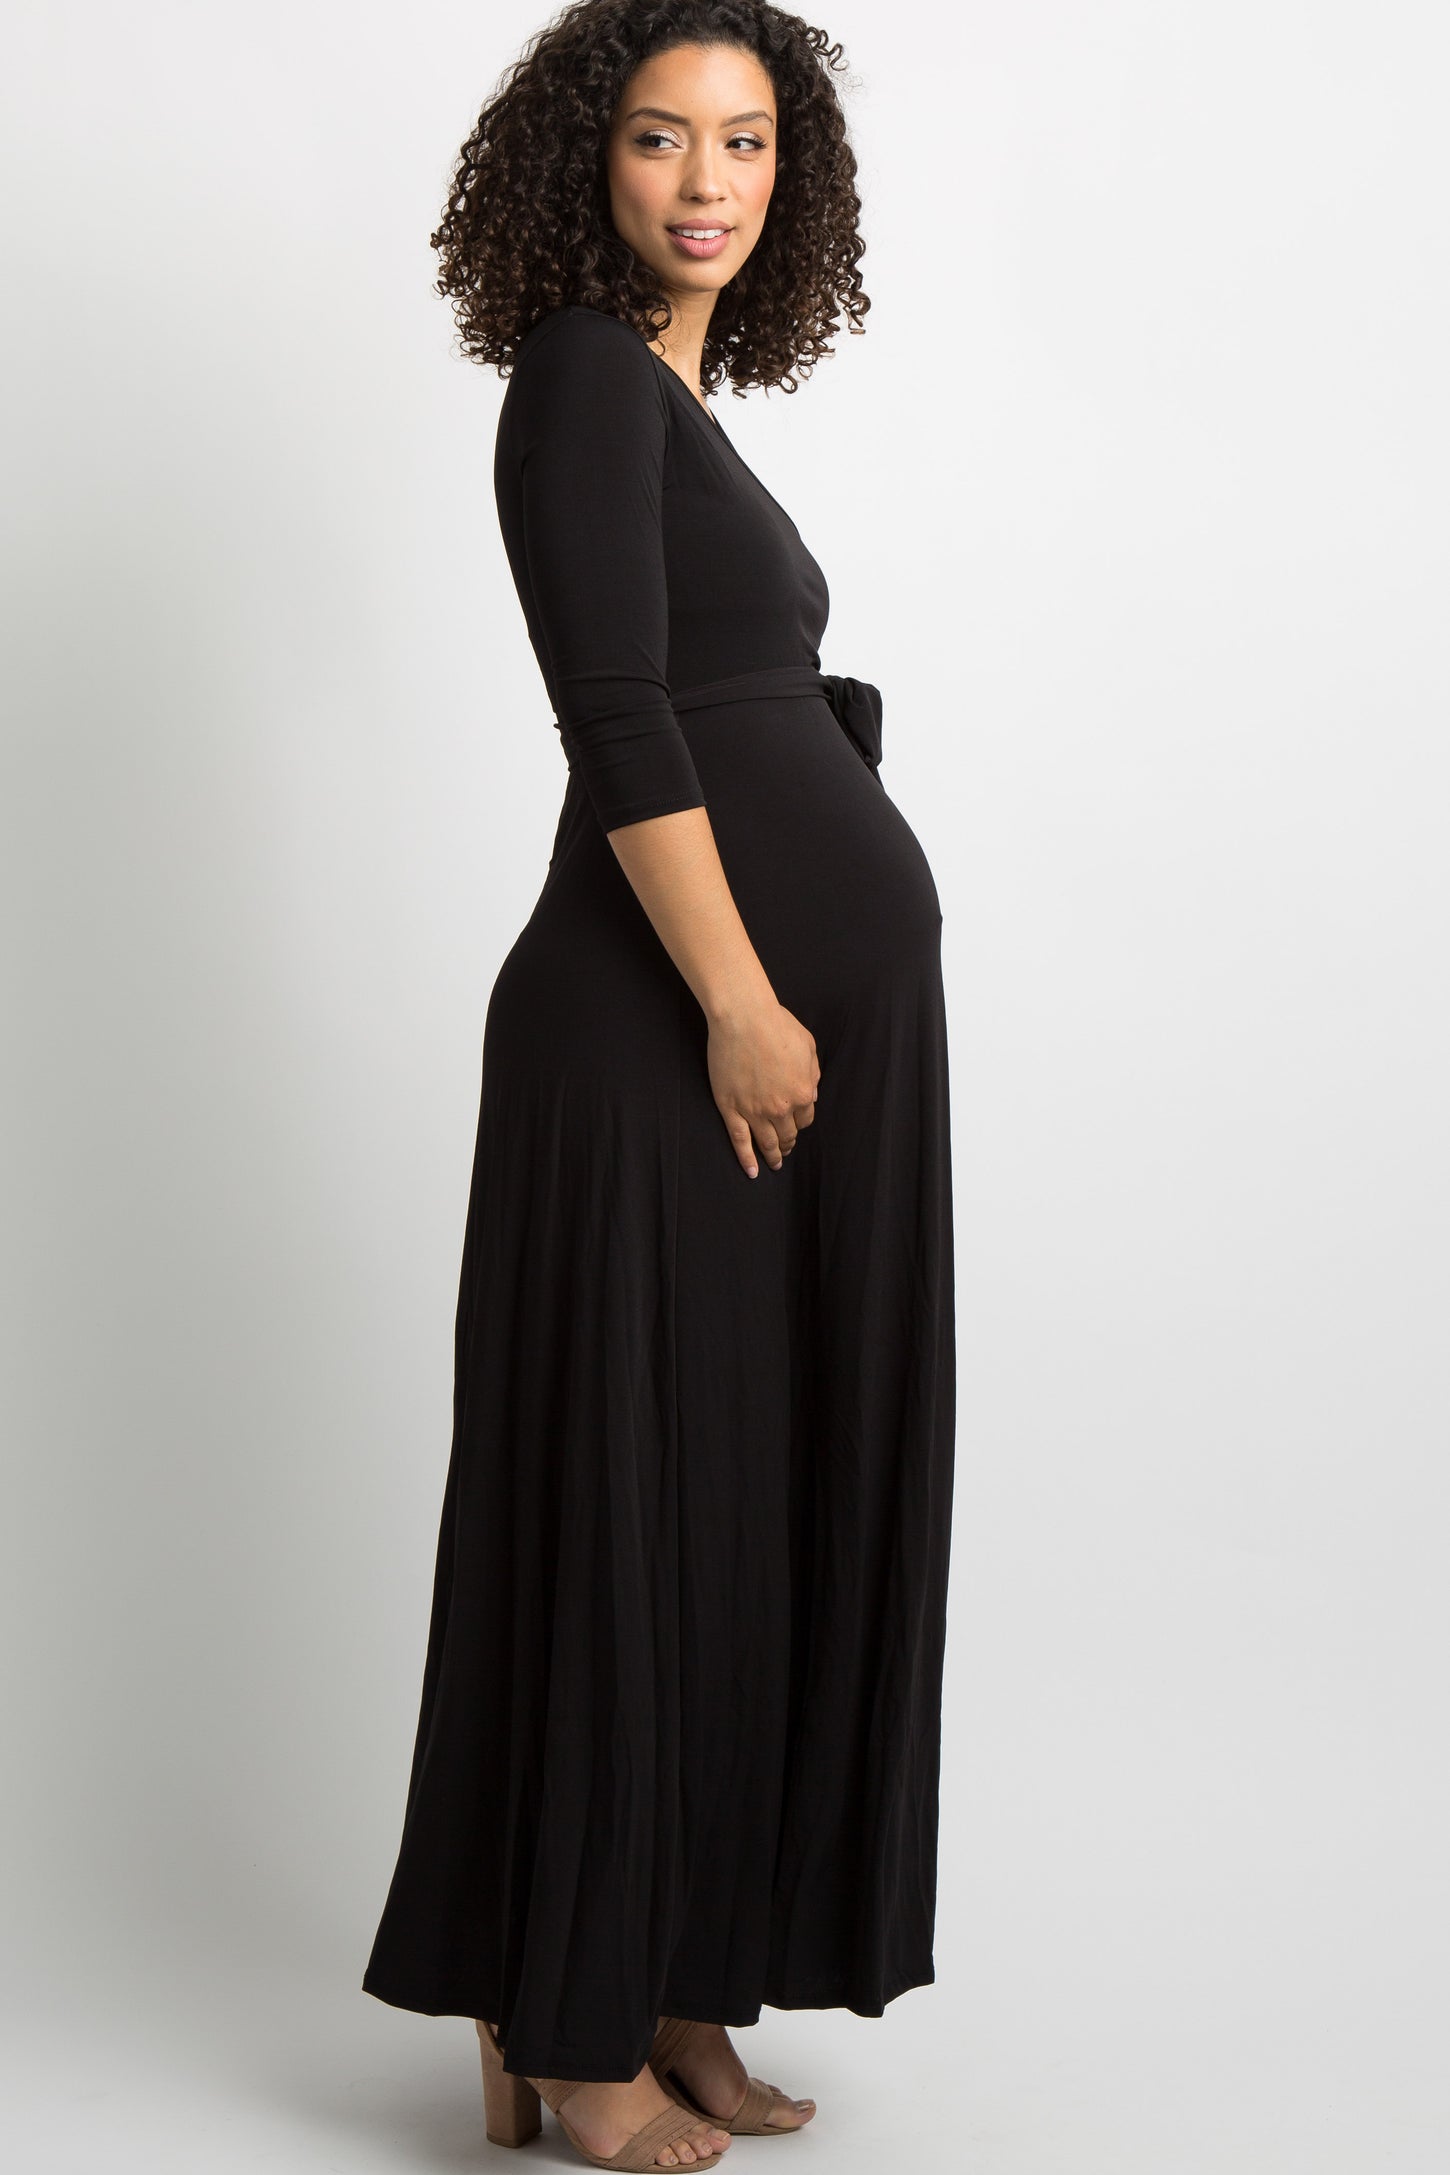 Black Solid Sash Tie Maternity Maxi Dress